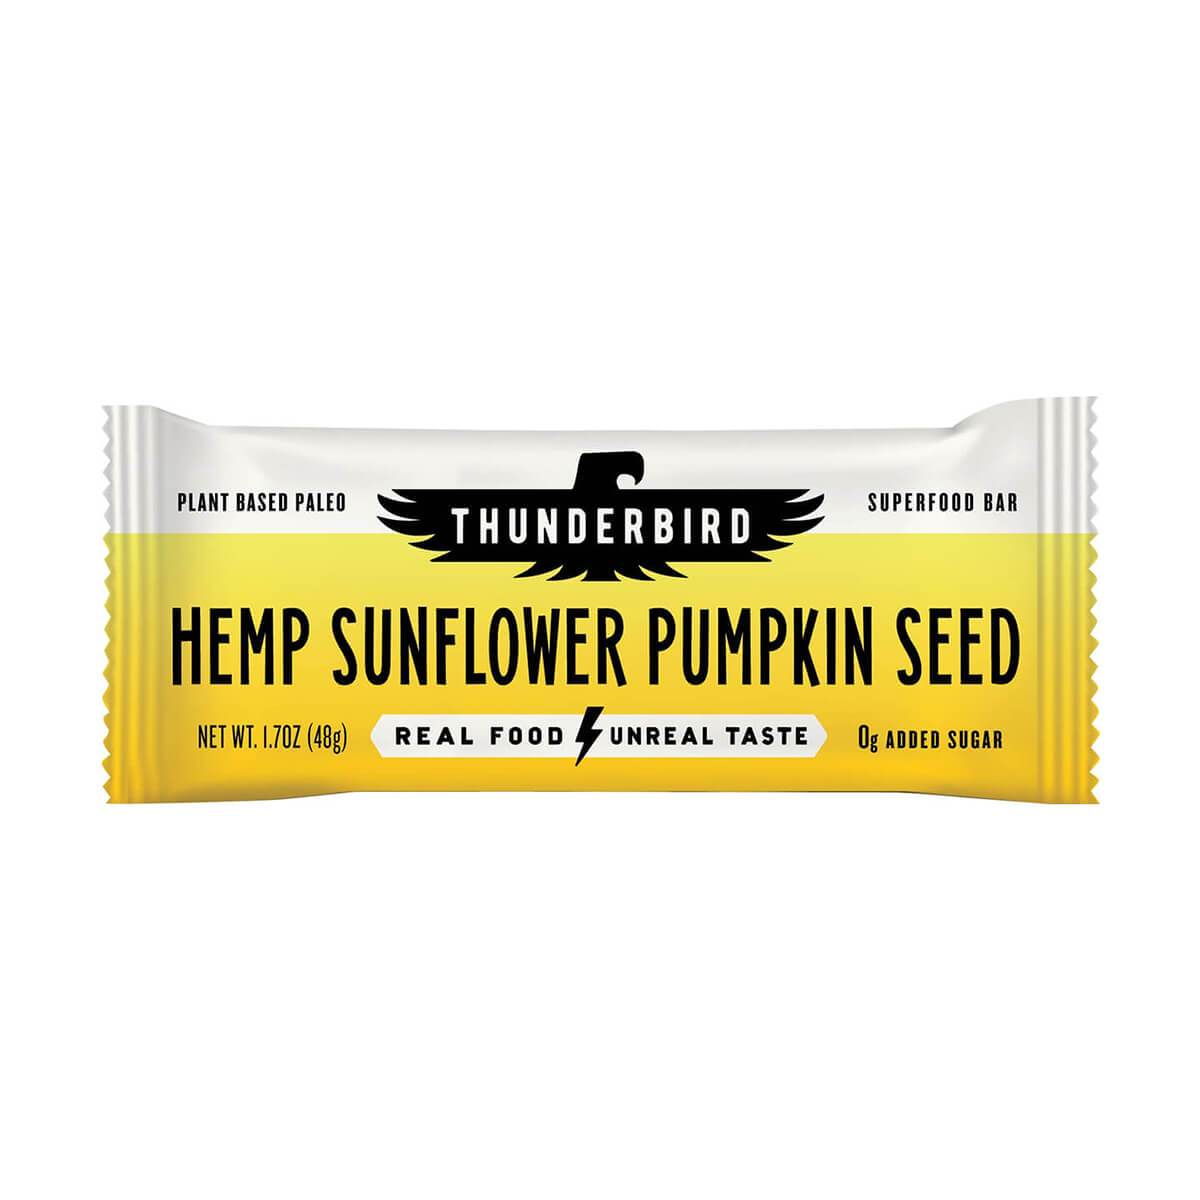 Hemp Sunflower Pumpkin Seed - Box of 12 Bars